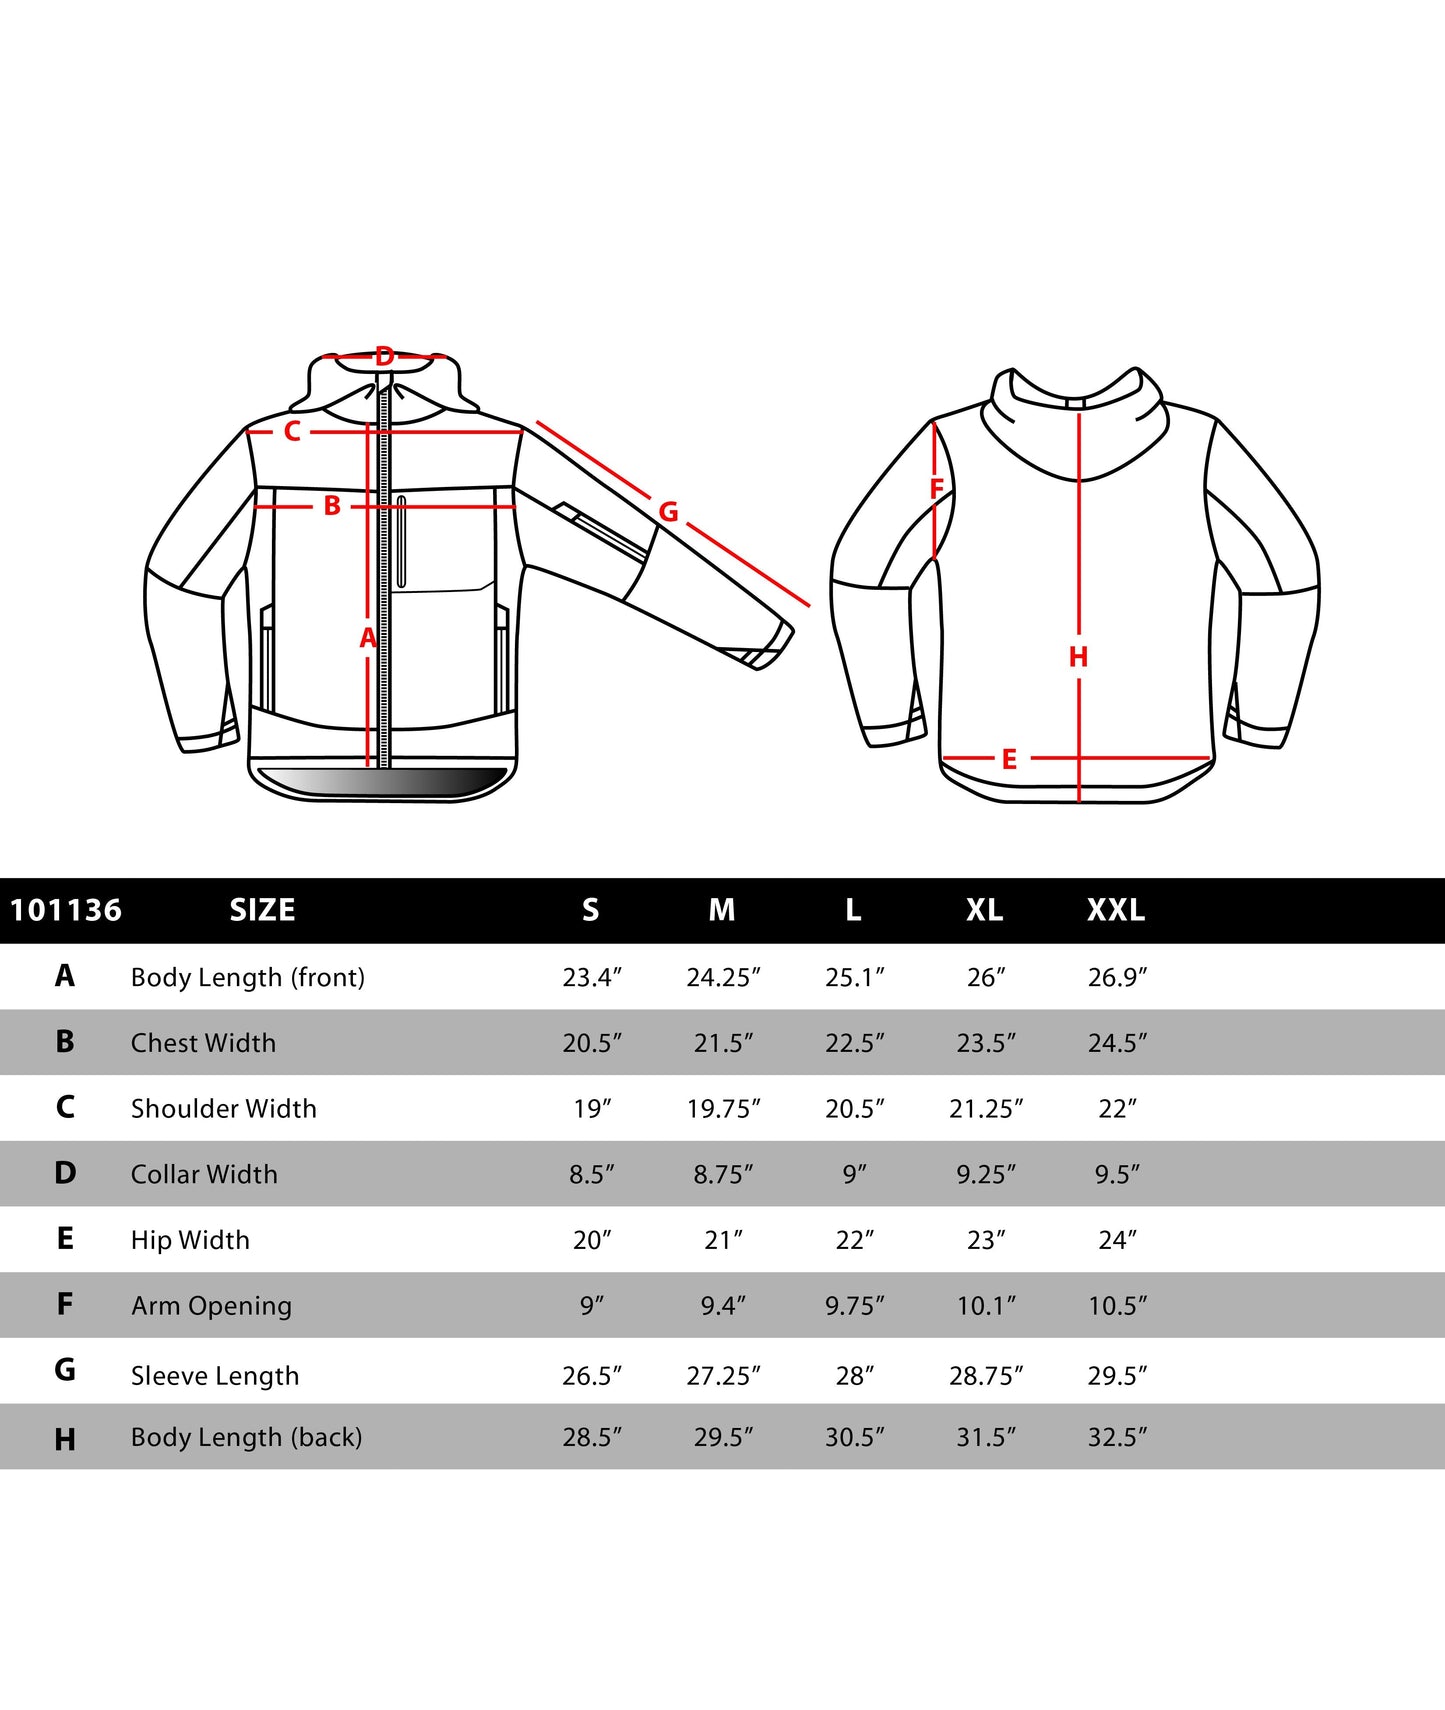 Cirrus Technical Fleece Jacket | CLEARANCE